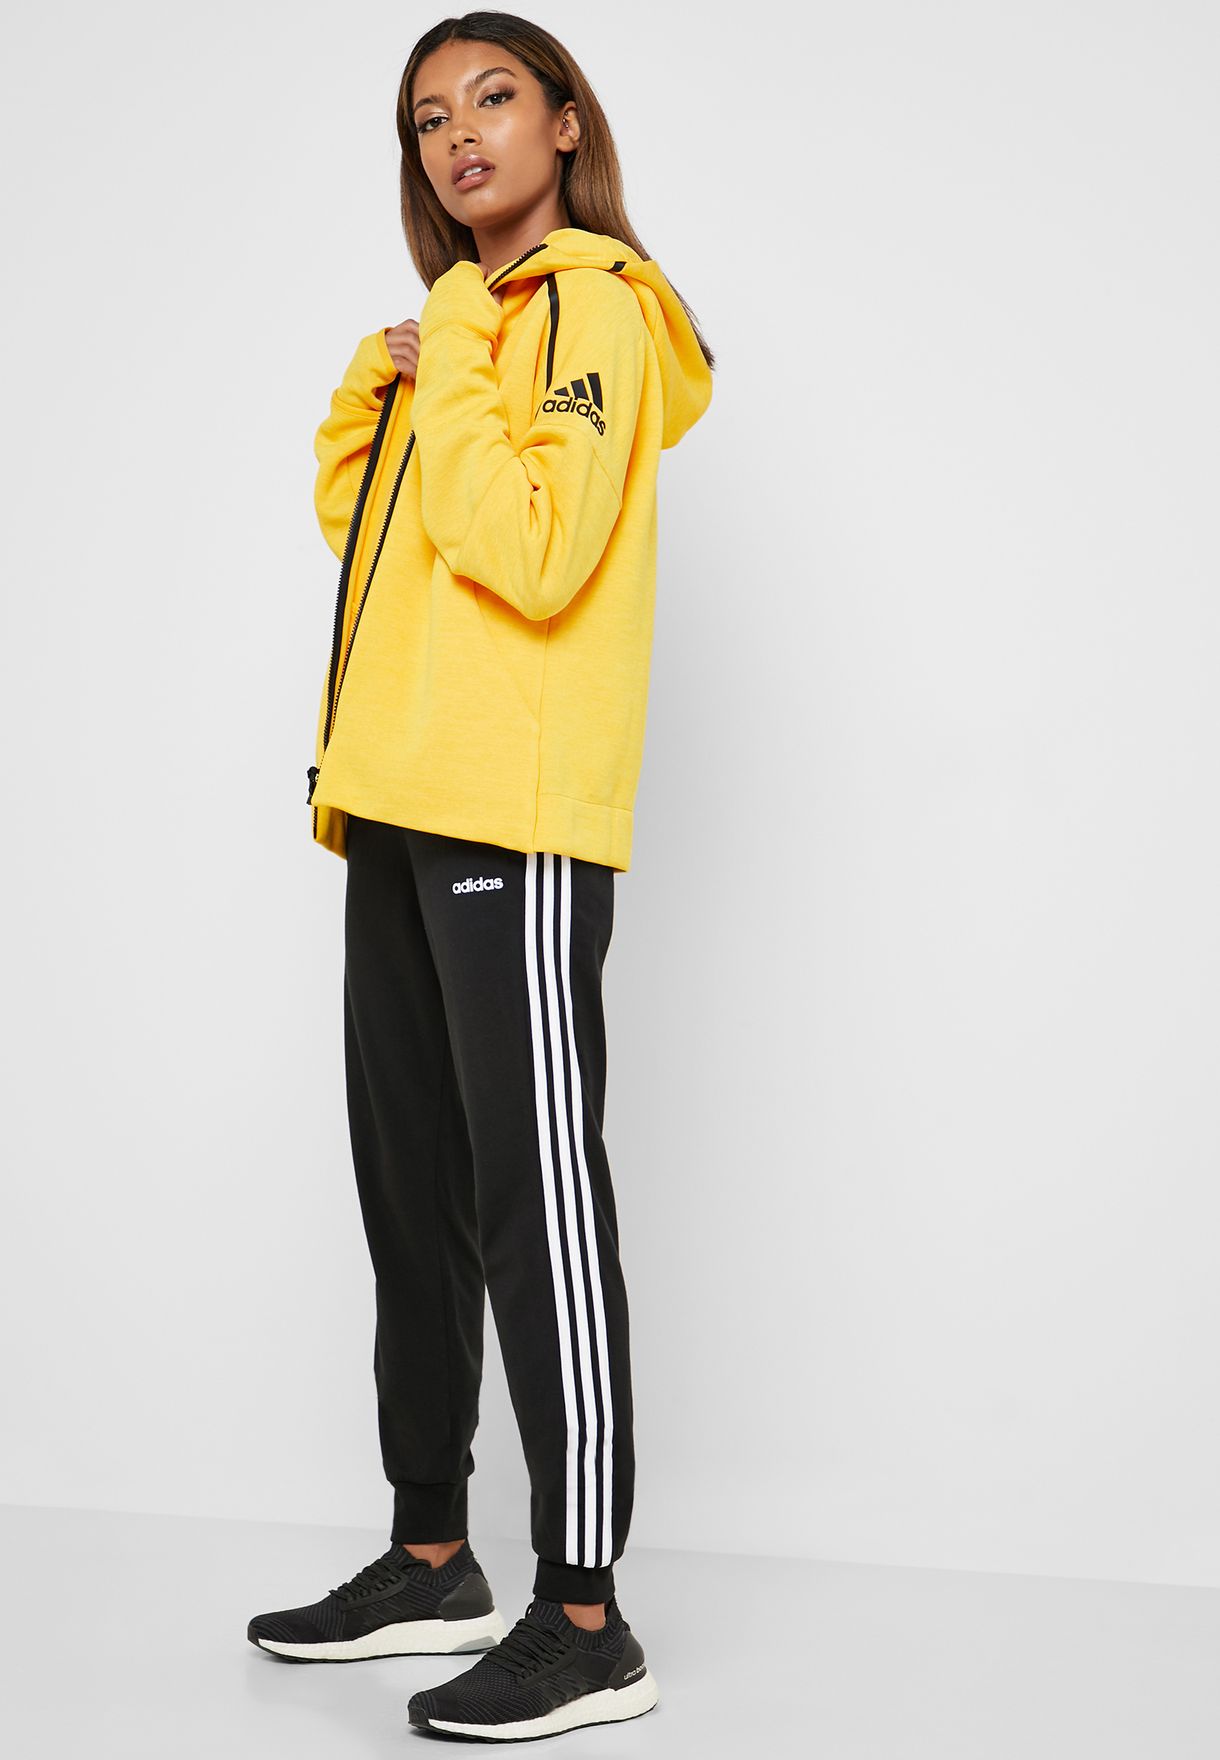 adidas black hoodie yellow stripes